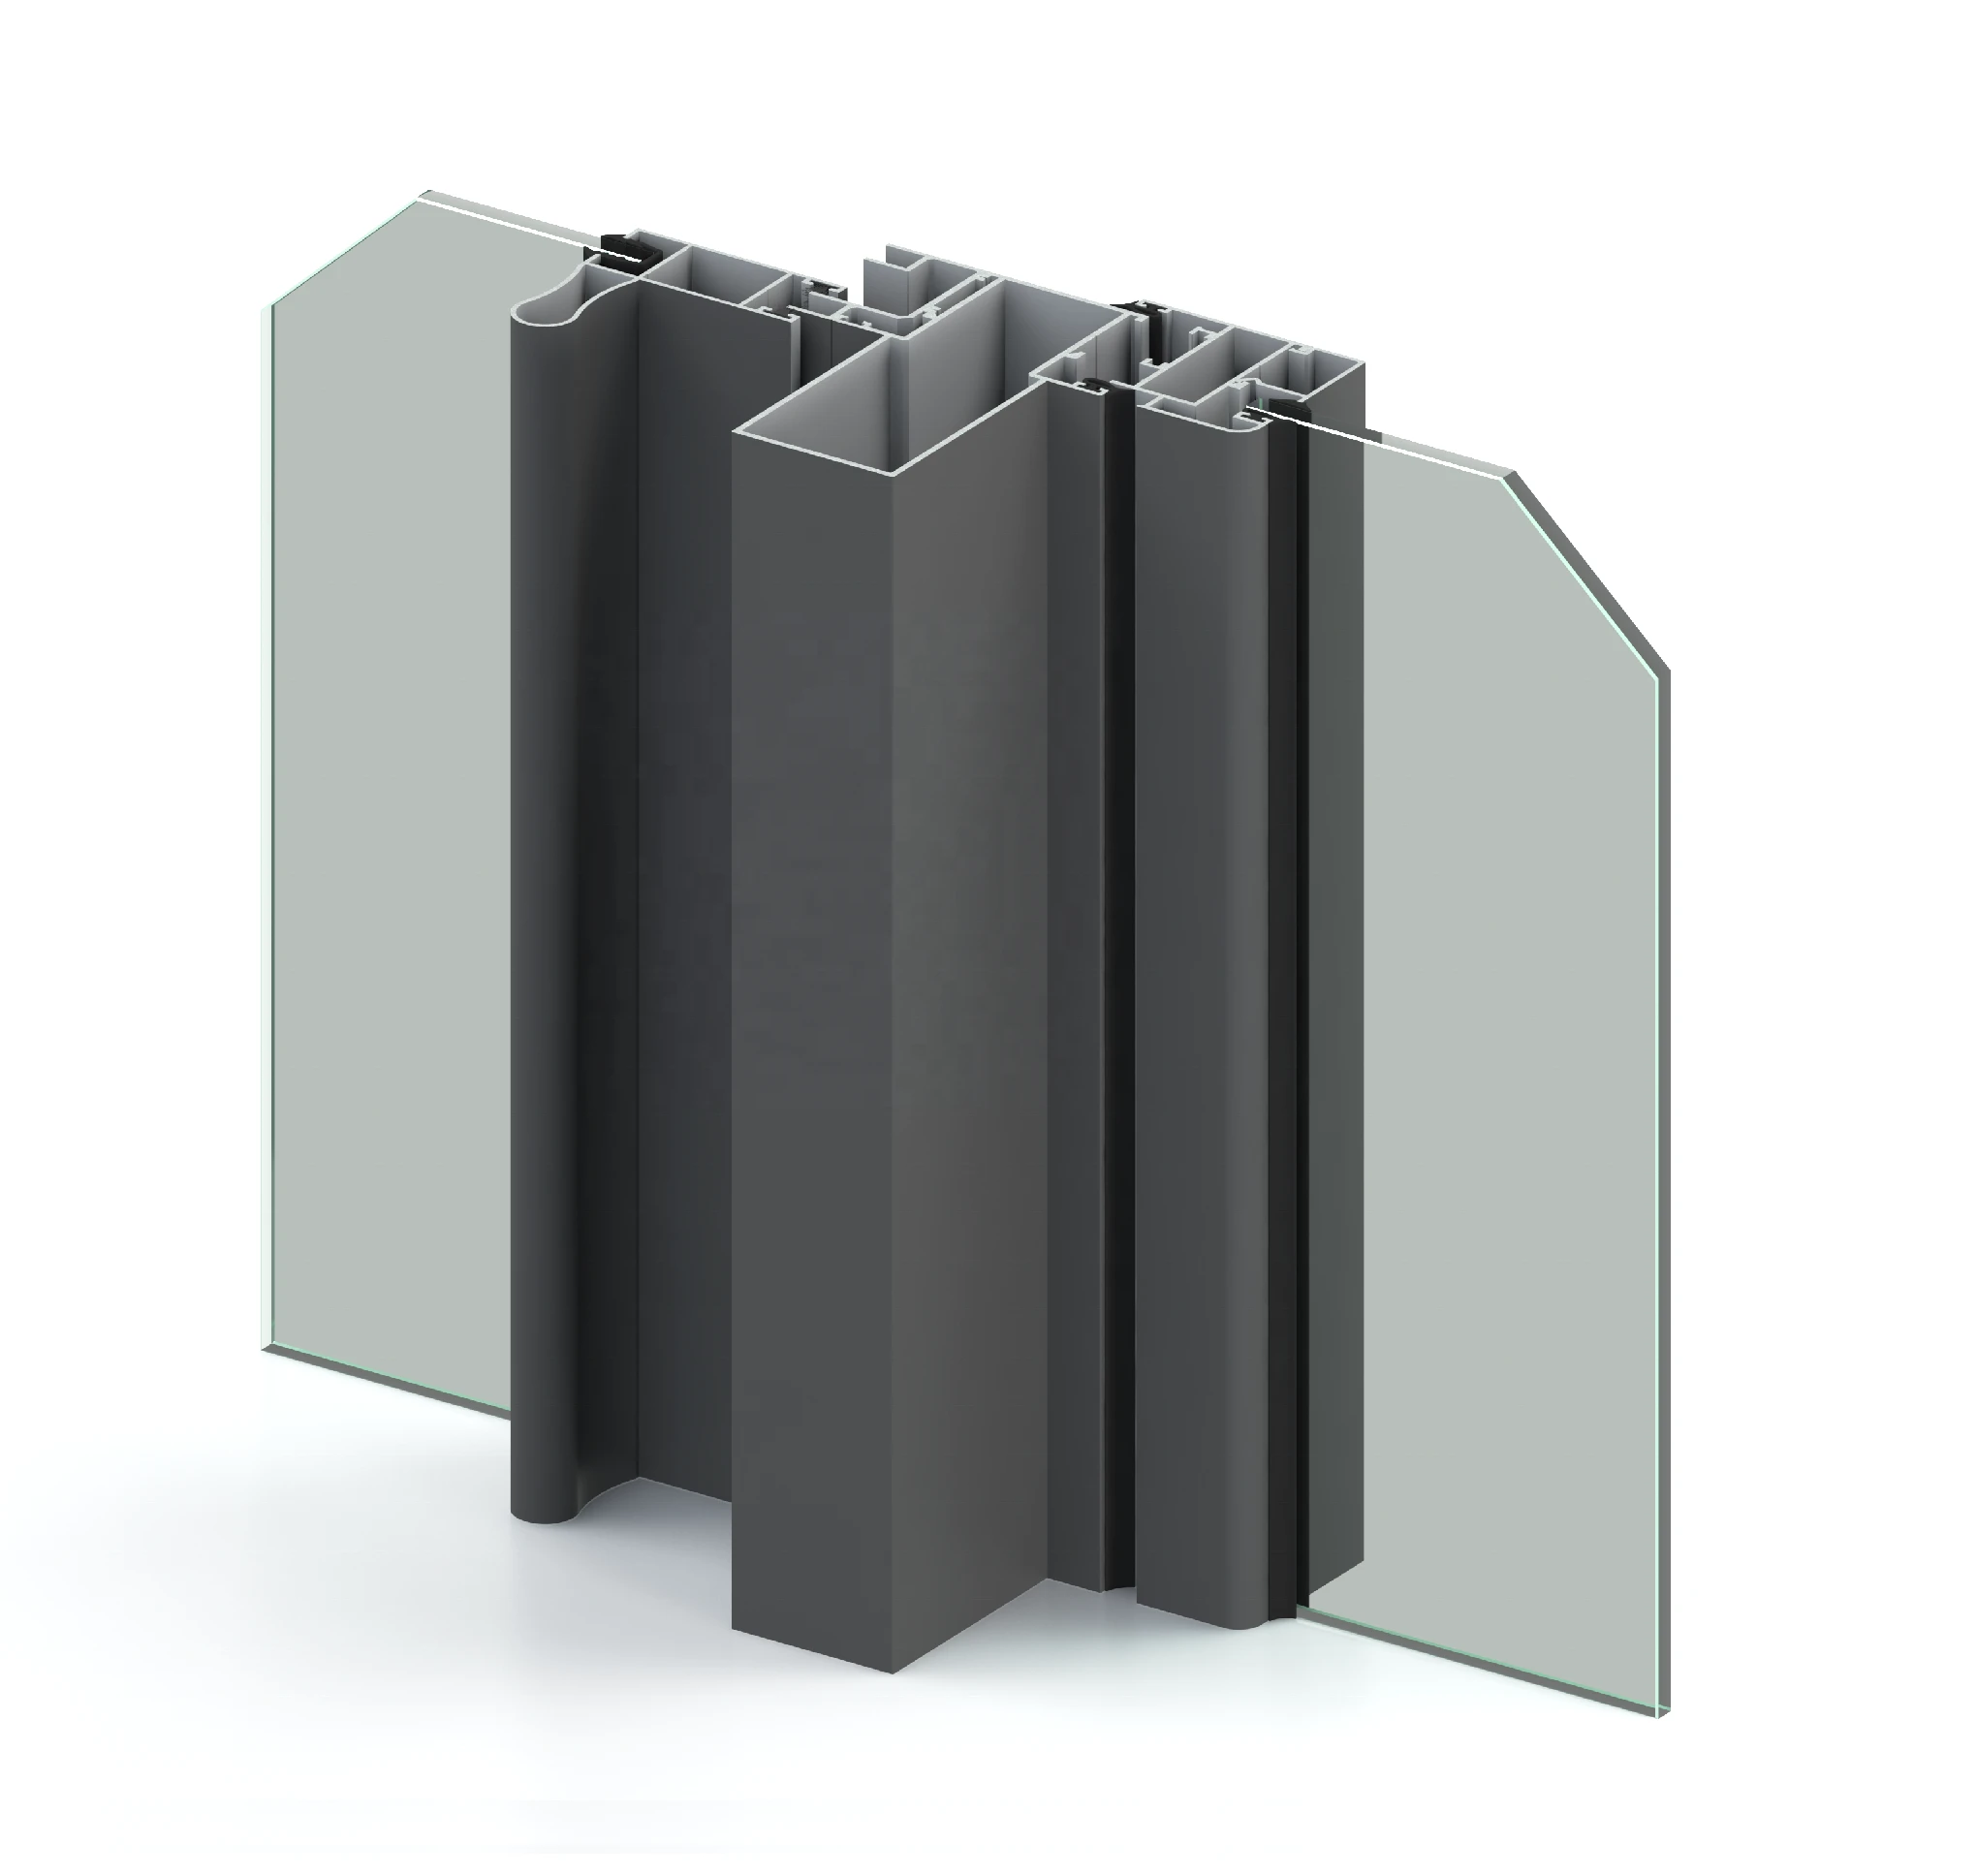 RI 40 industrial frame balcony glazing system extrusion aluminium profile